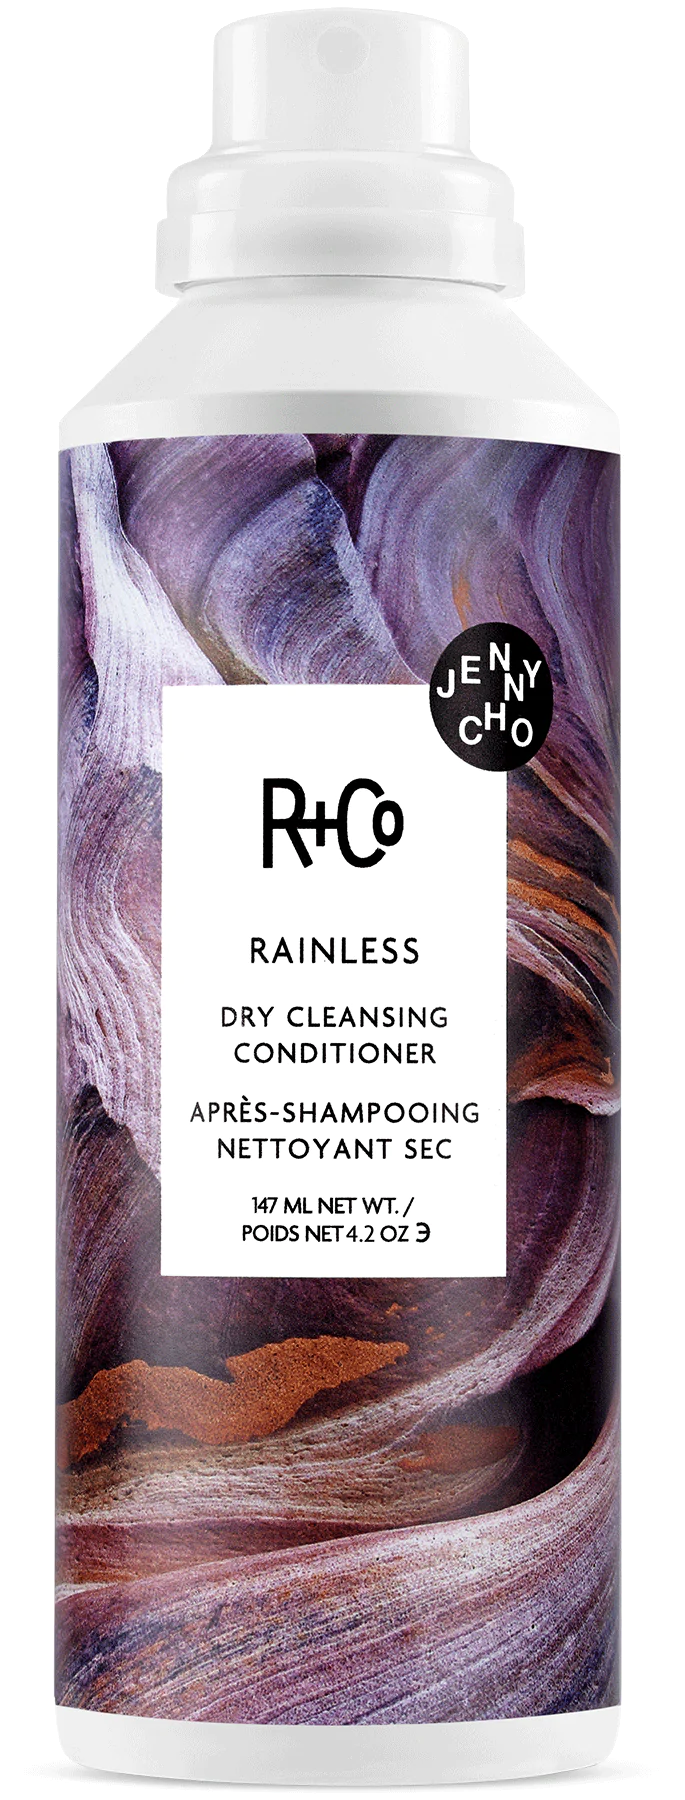 R+co Rainless